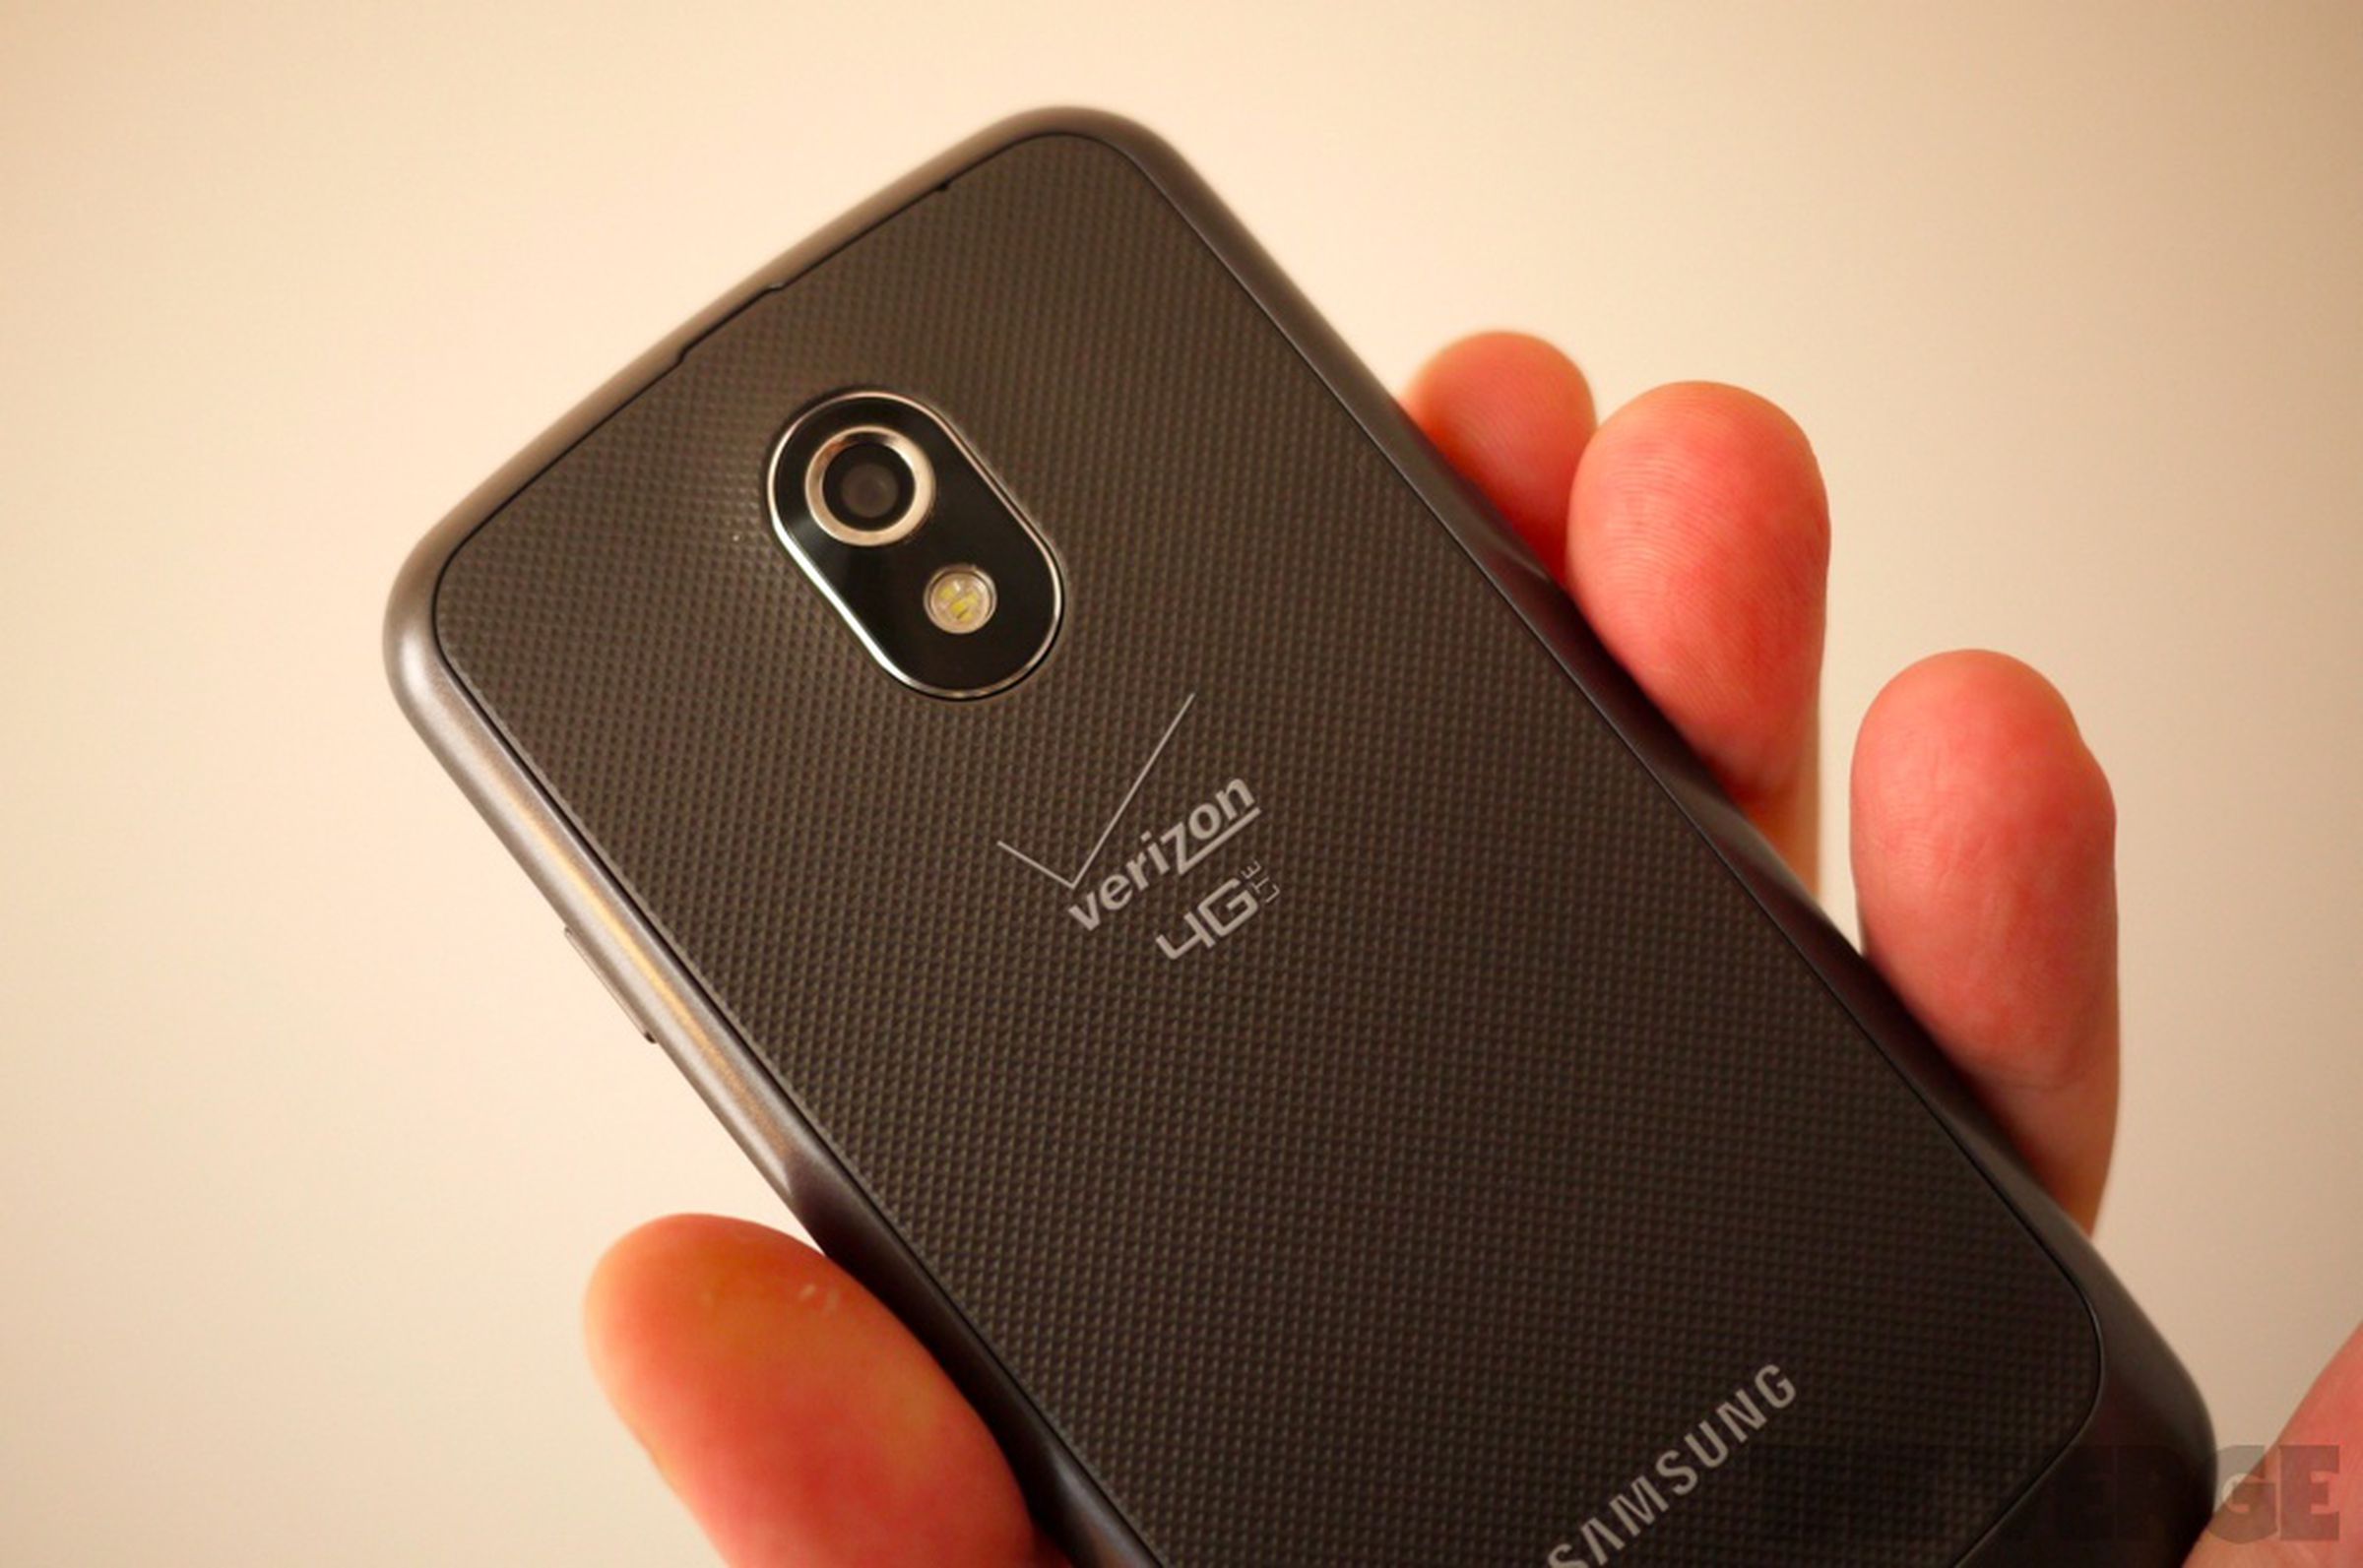 Galaxy Nexus for Verizon